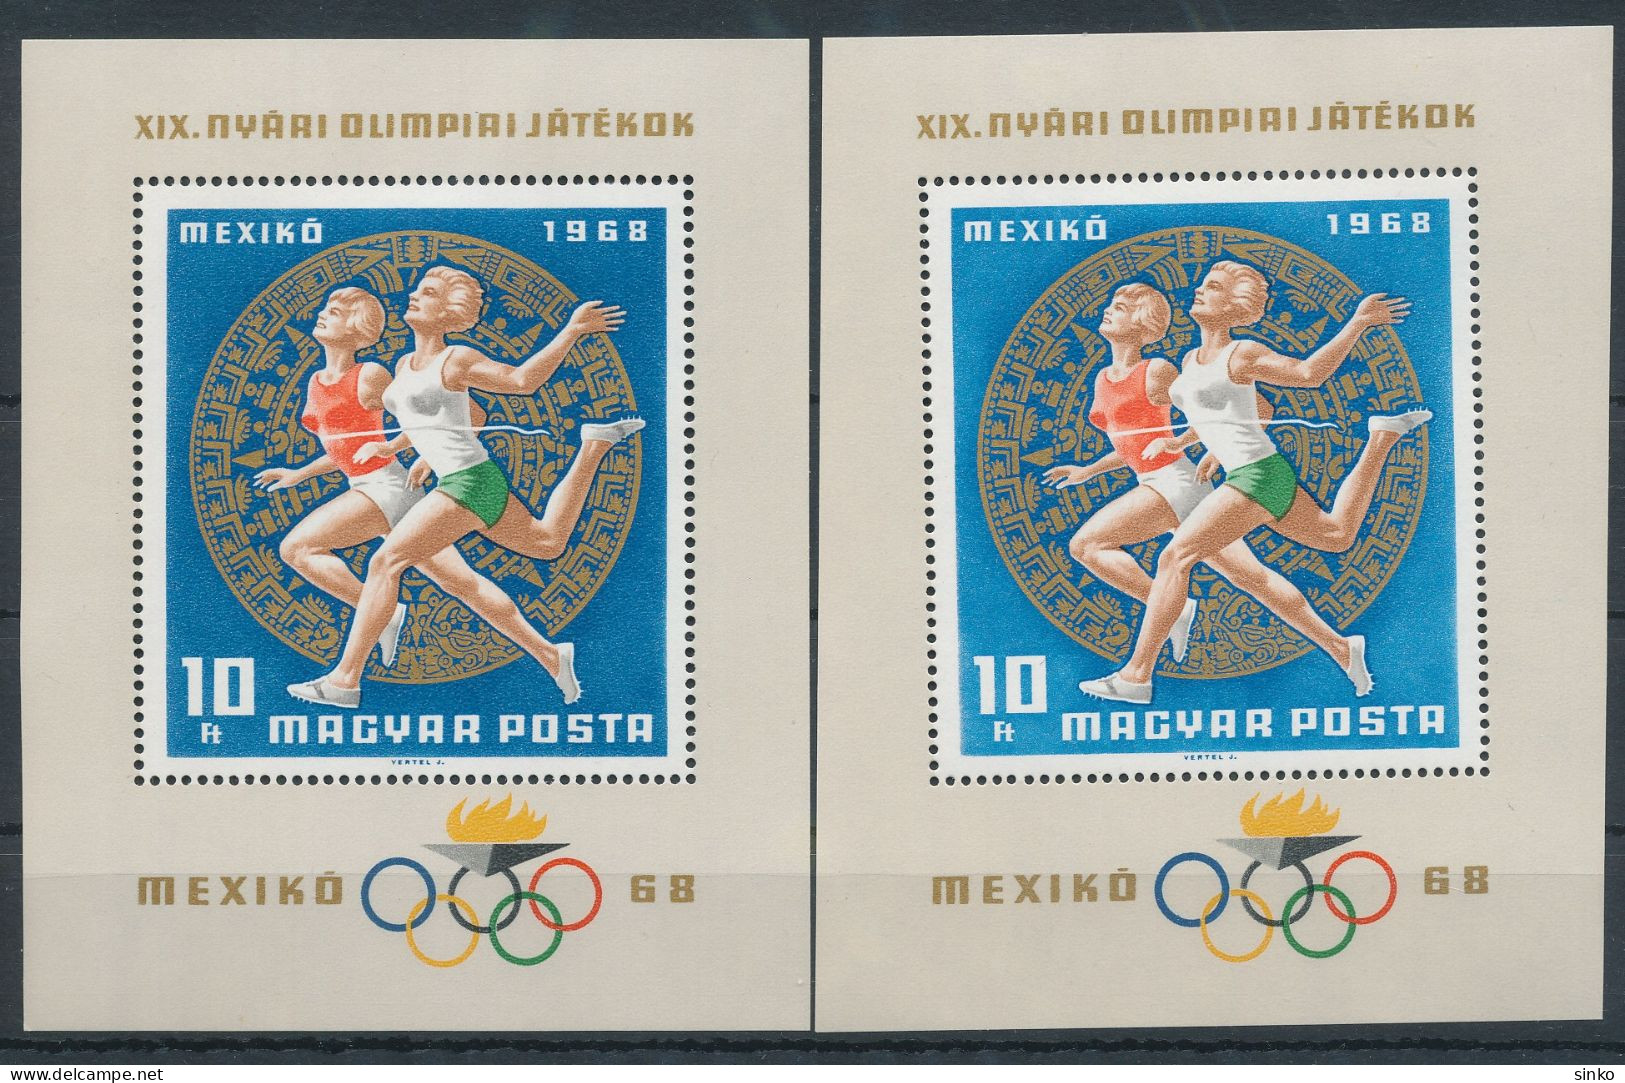 1968. Olympics (V.) - Mexico - Block - Misprint - Errors, Freaks & Oddities (EFO)